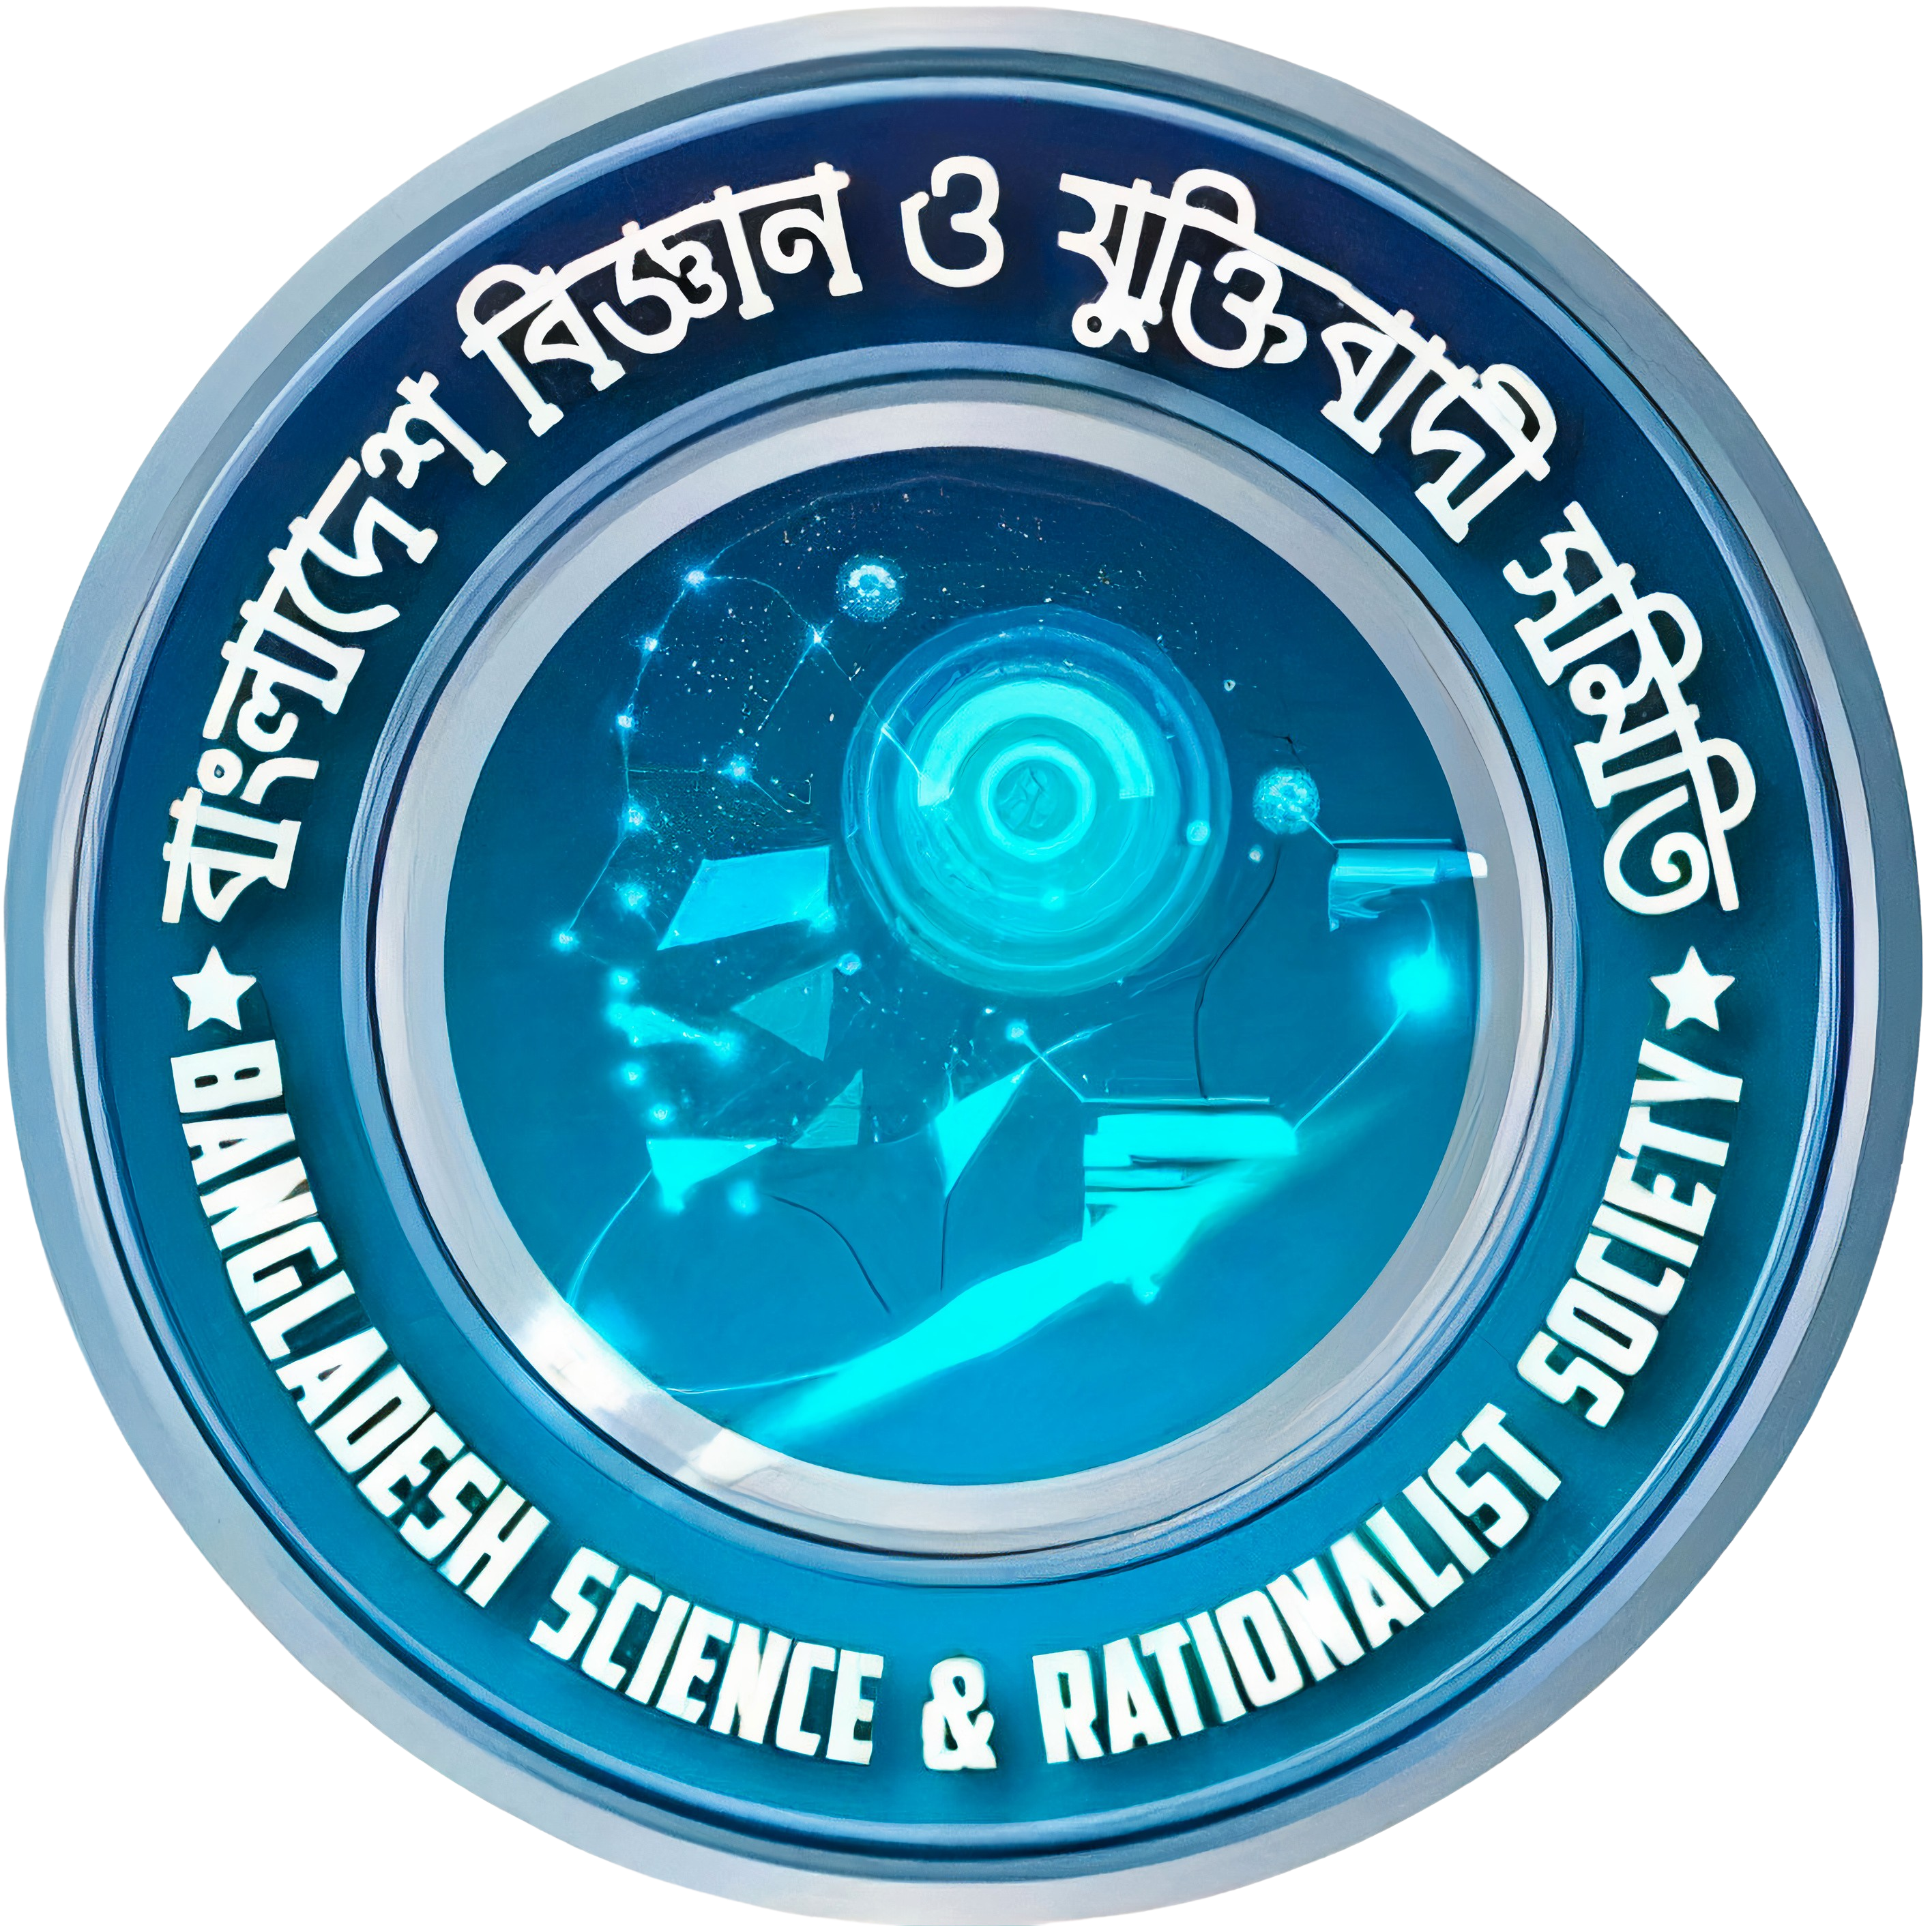 Bangladesh Science and Rationalist Society